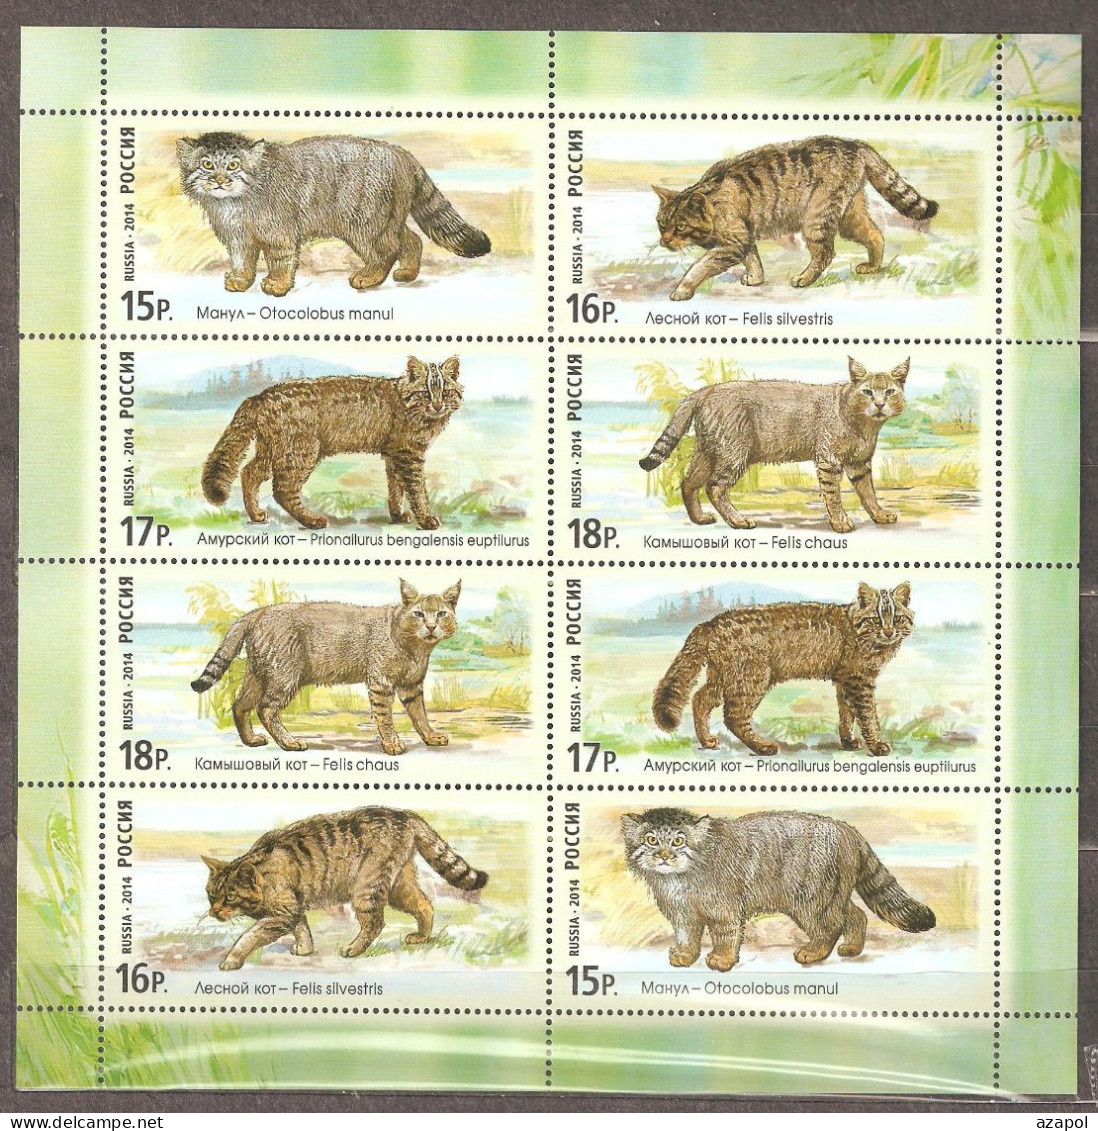 Russia: Mint Sheet, Wild Cats, 2014, Mi#2067-70, MNH - Big Cats (cats Of Prey)